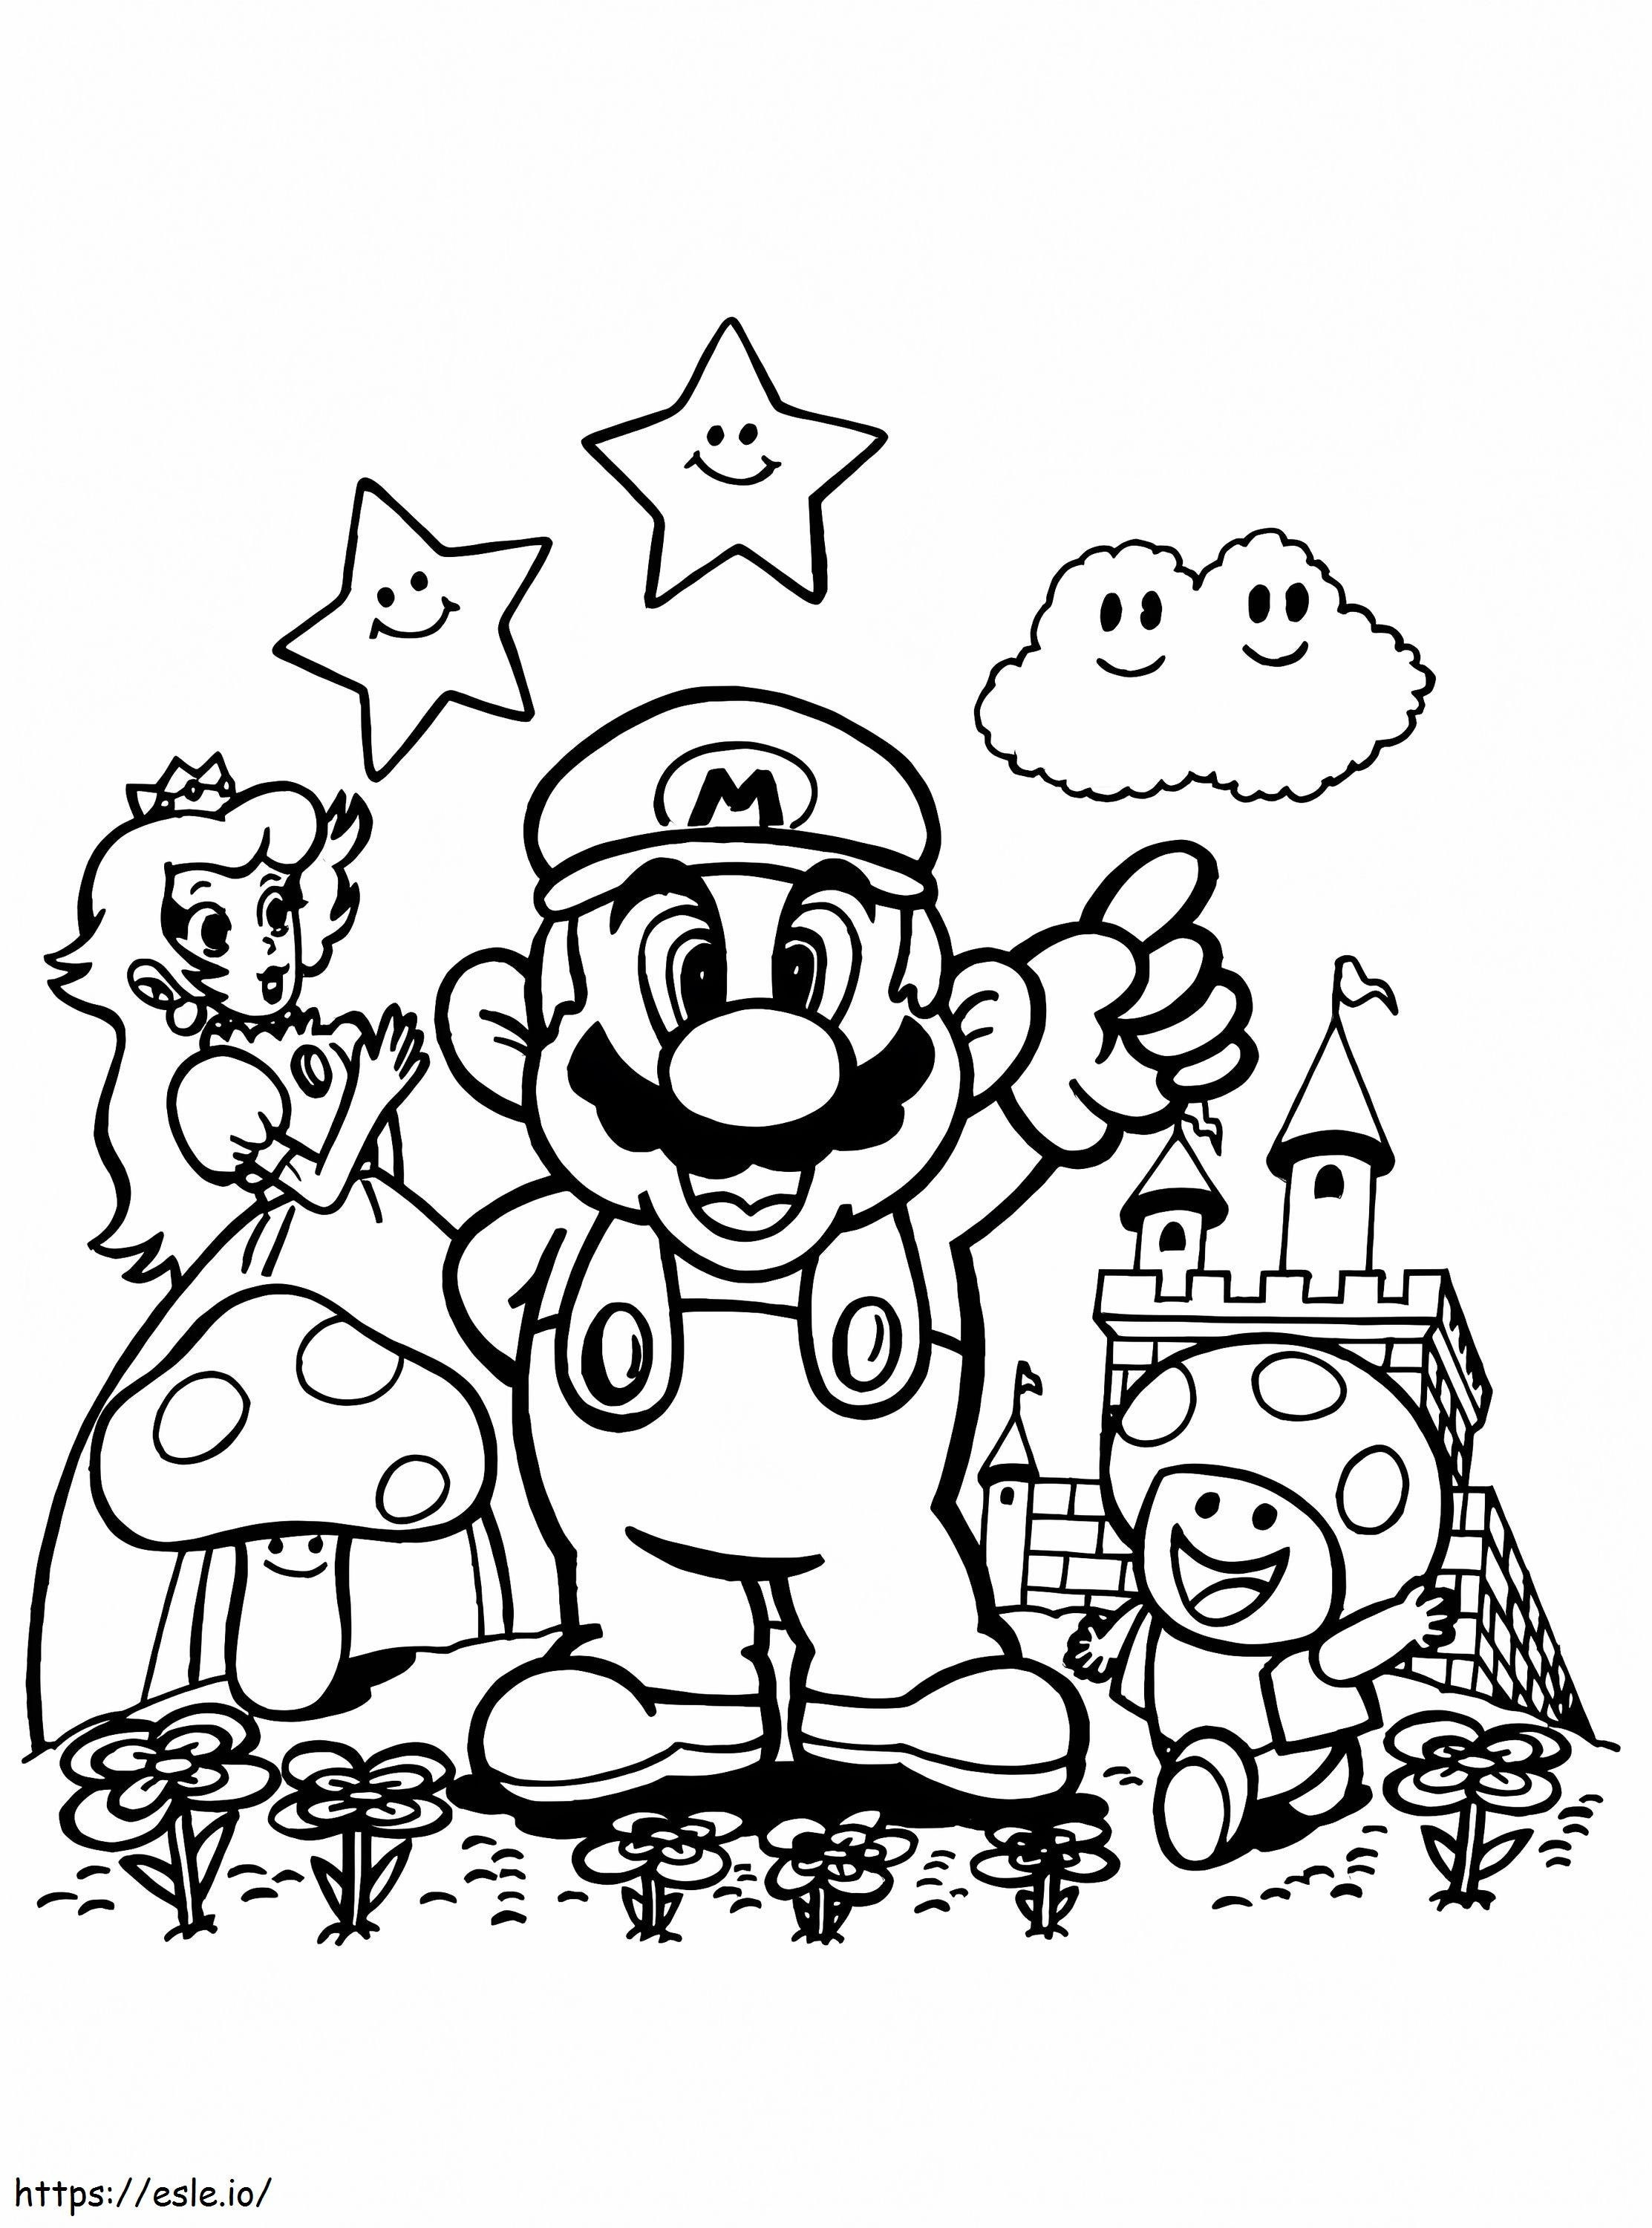 Mario en vriend kleurplaat kleurplaat